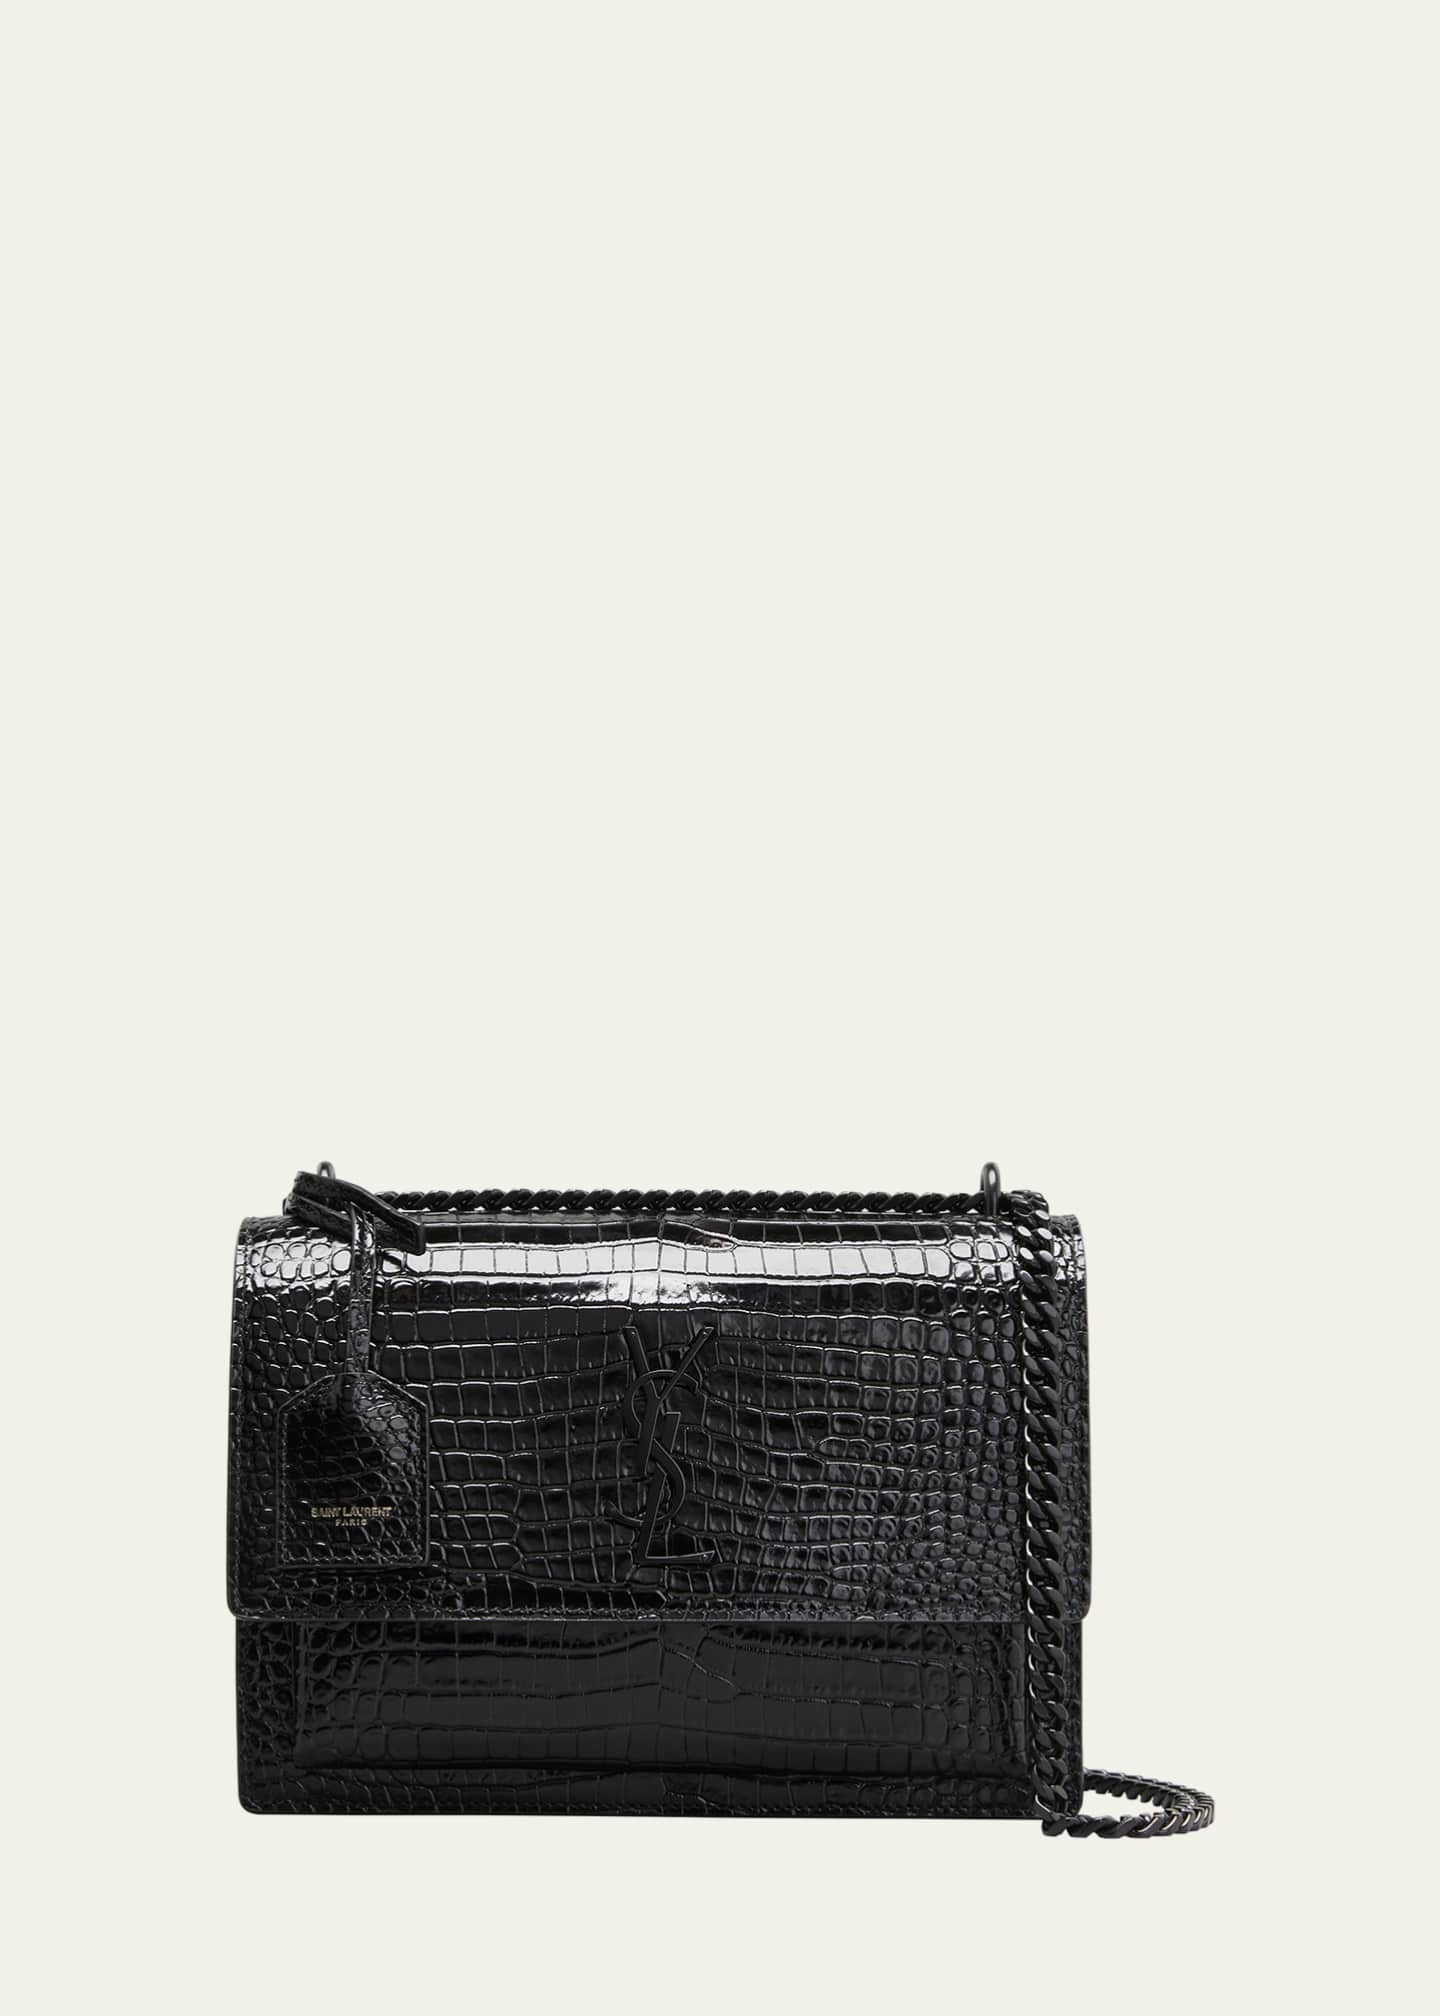 Saint Laurent Medium Sunset Leather Shoulder Bag